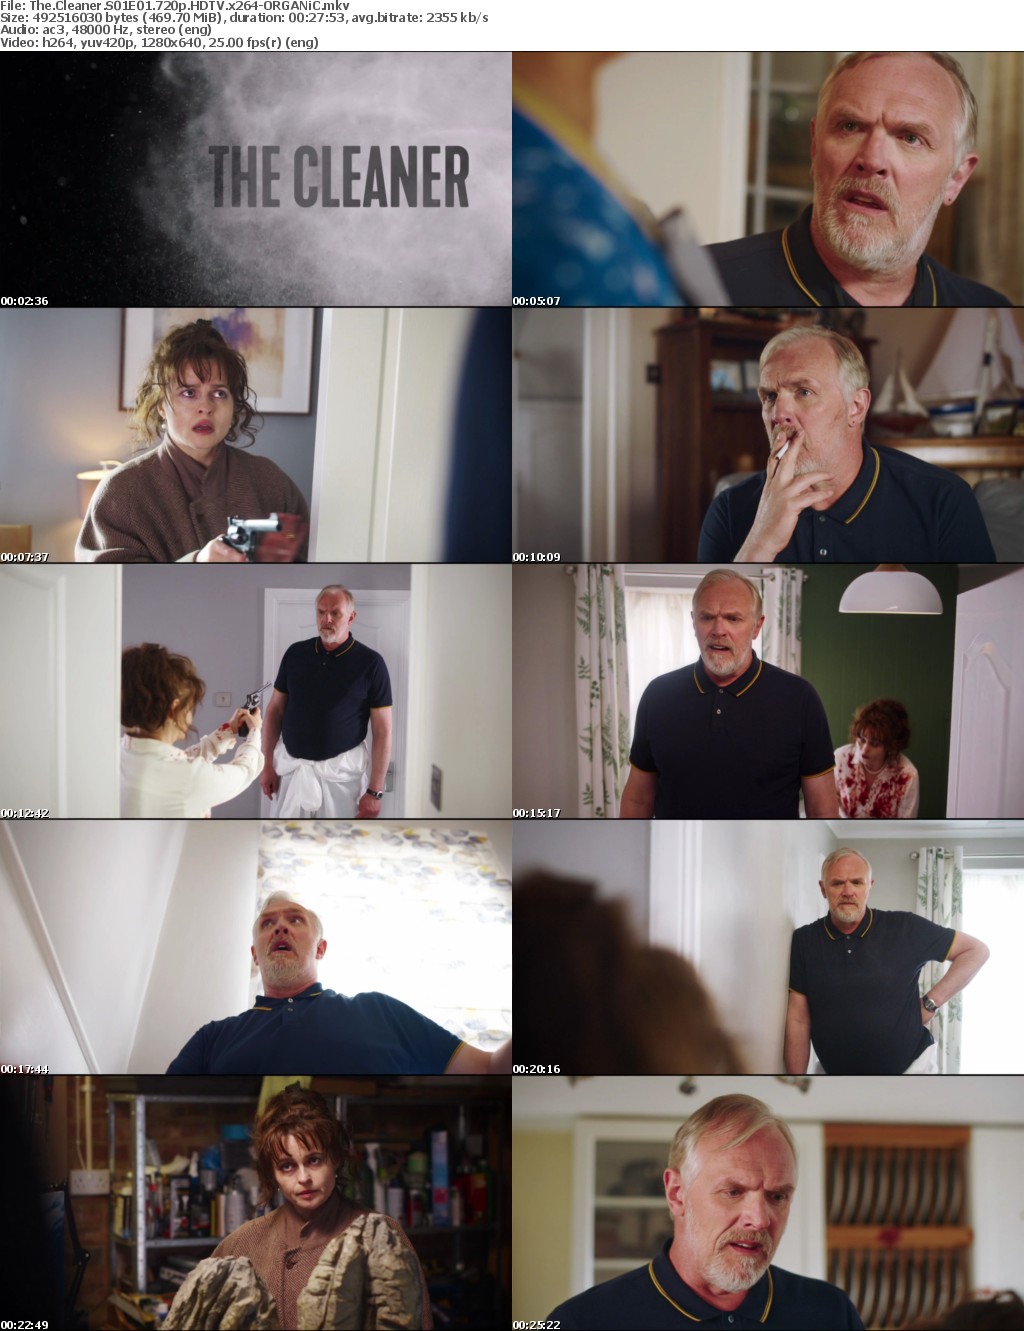 The Cleaner S01E01 720p HDTV x264-ORGANiC